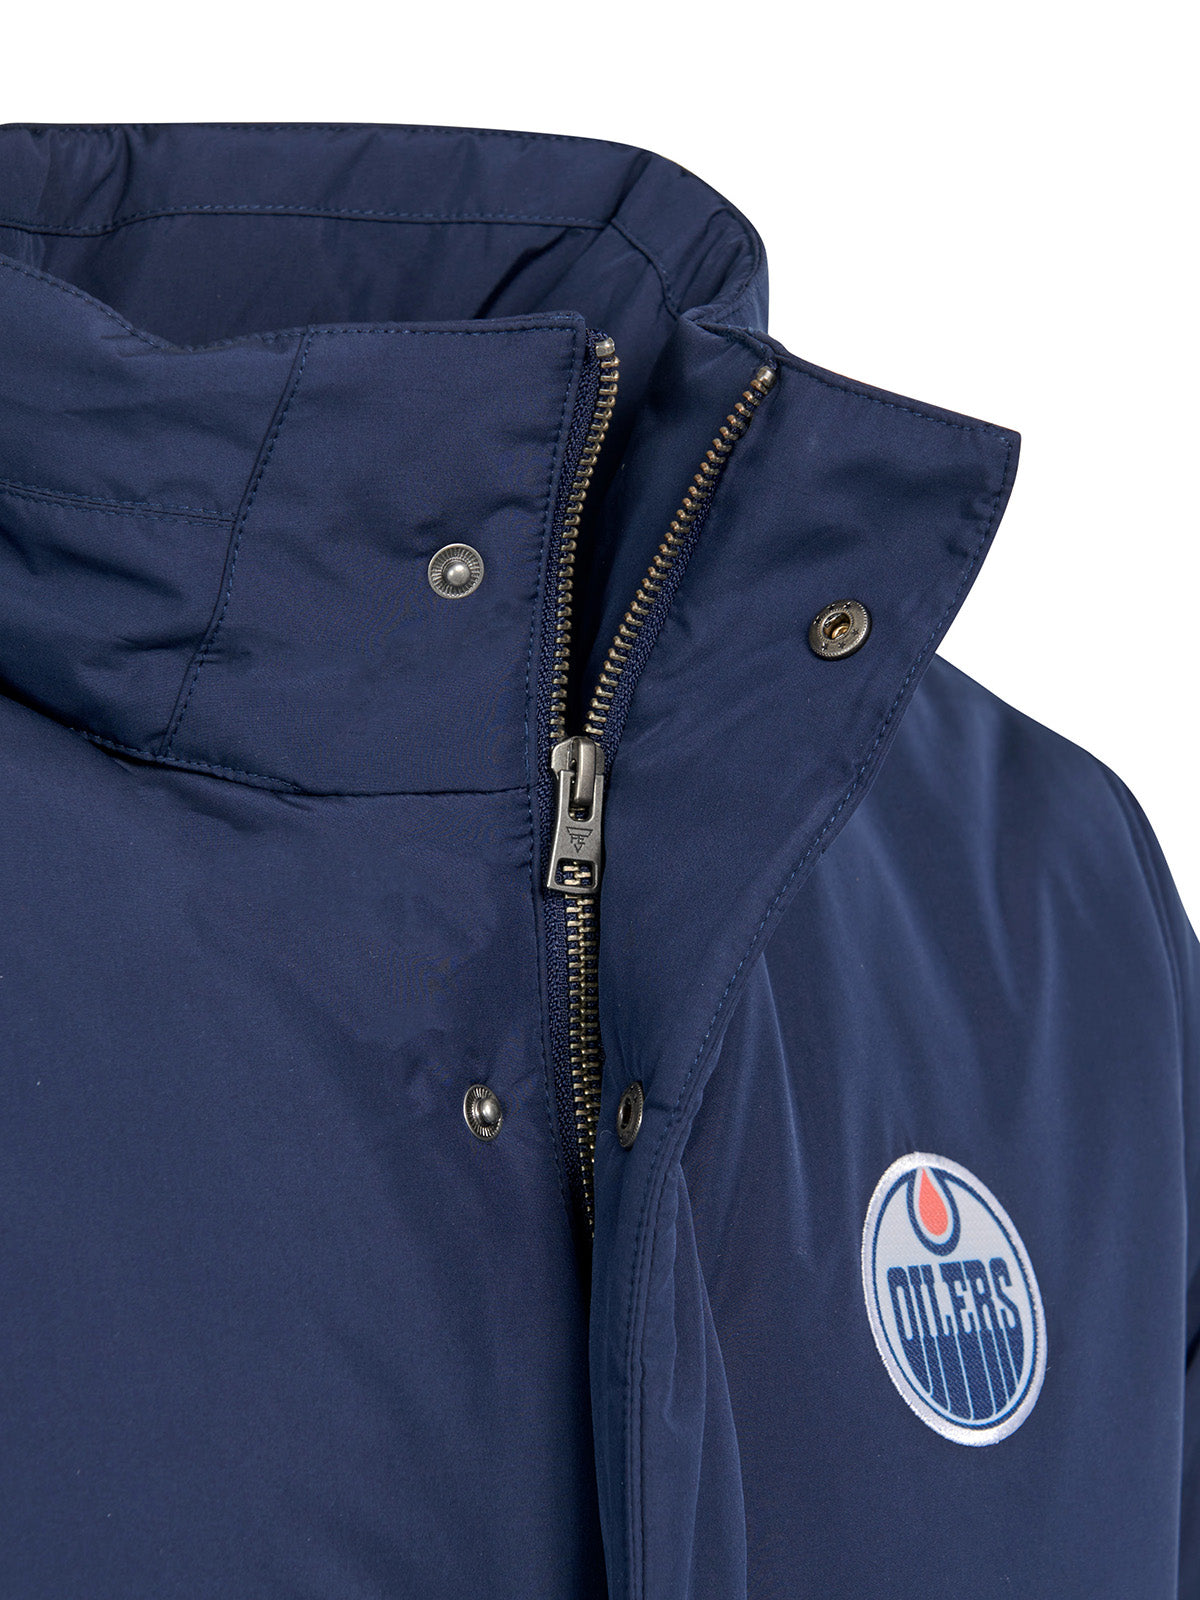 Edmonton Oilers Coach's Jacket